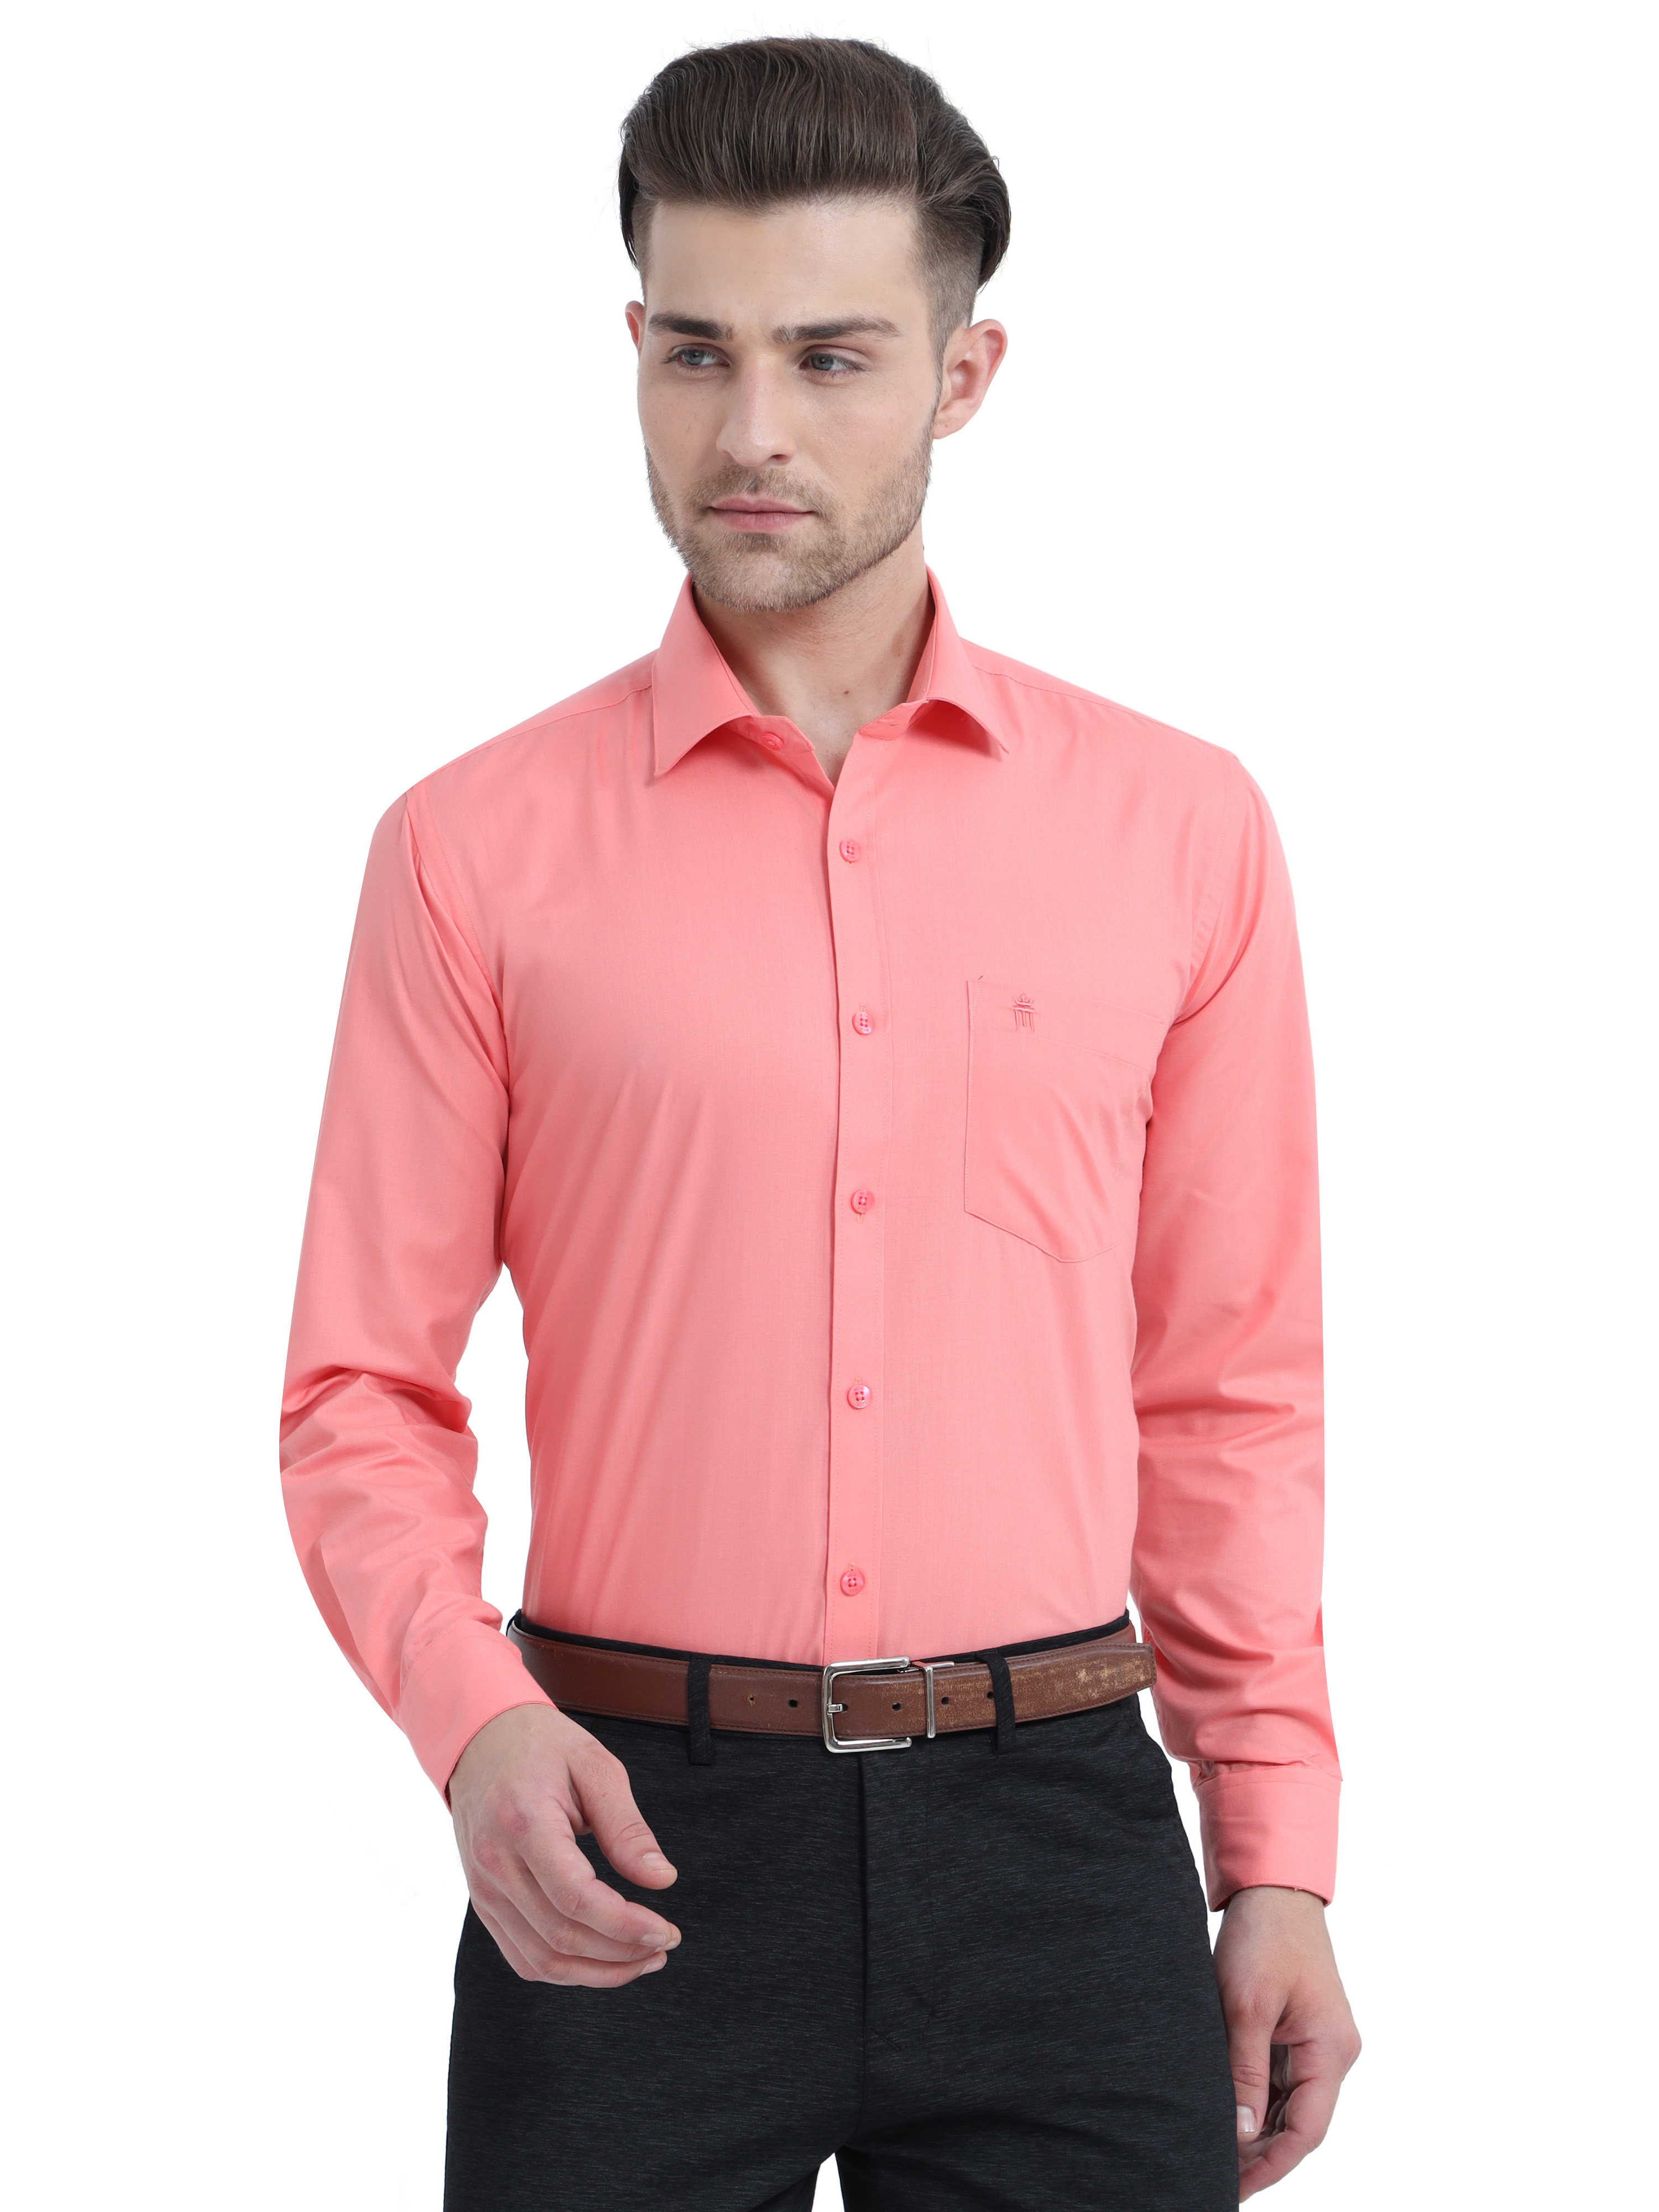 Shop For Stain Guard Shirt Peach Colour Full Sleeve